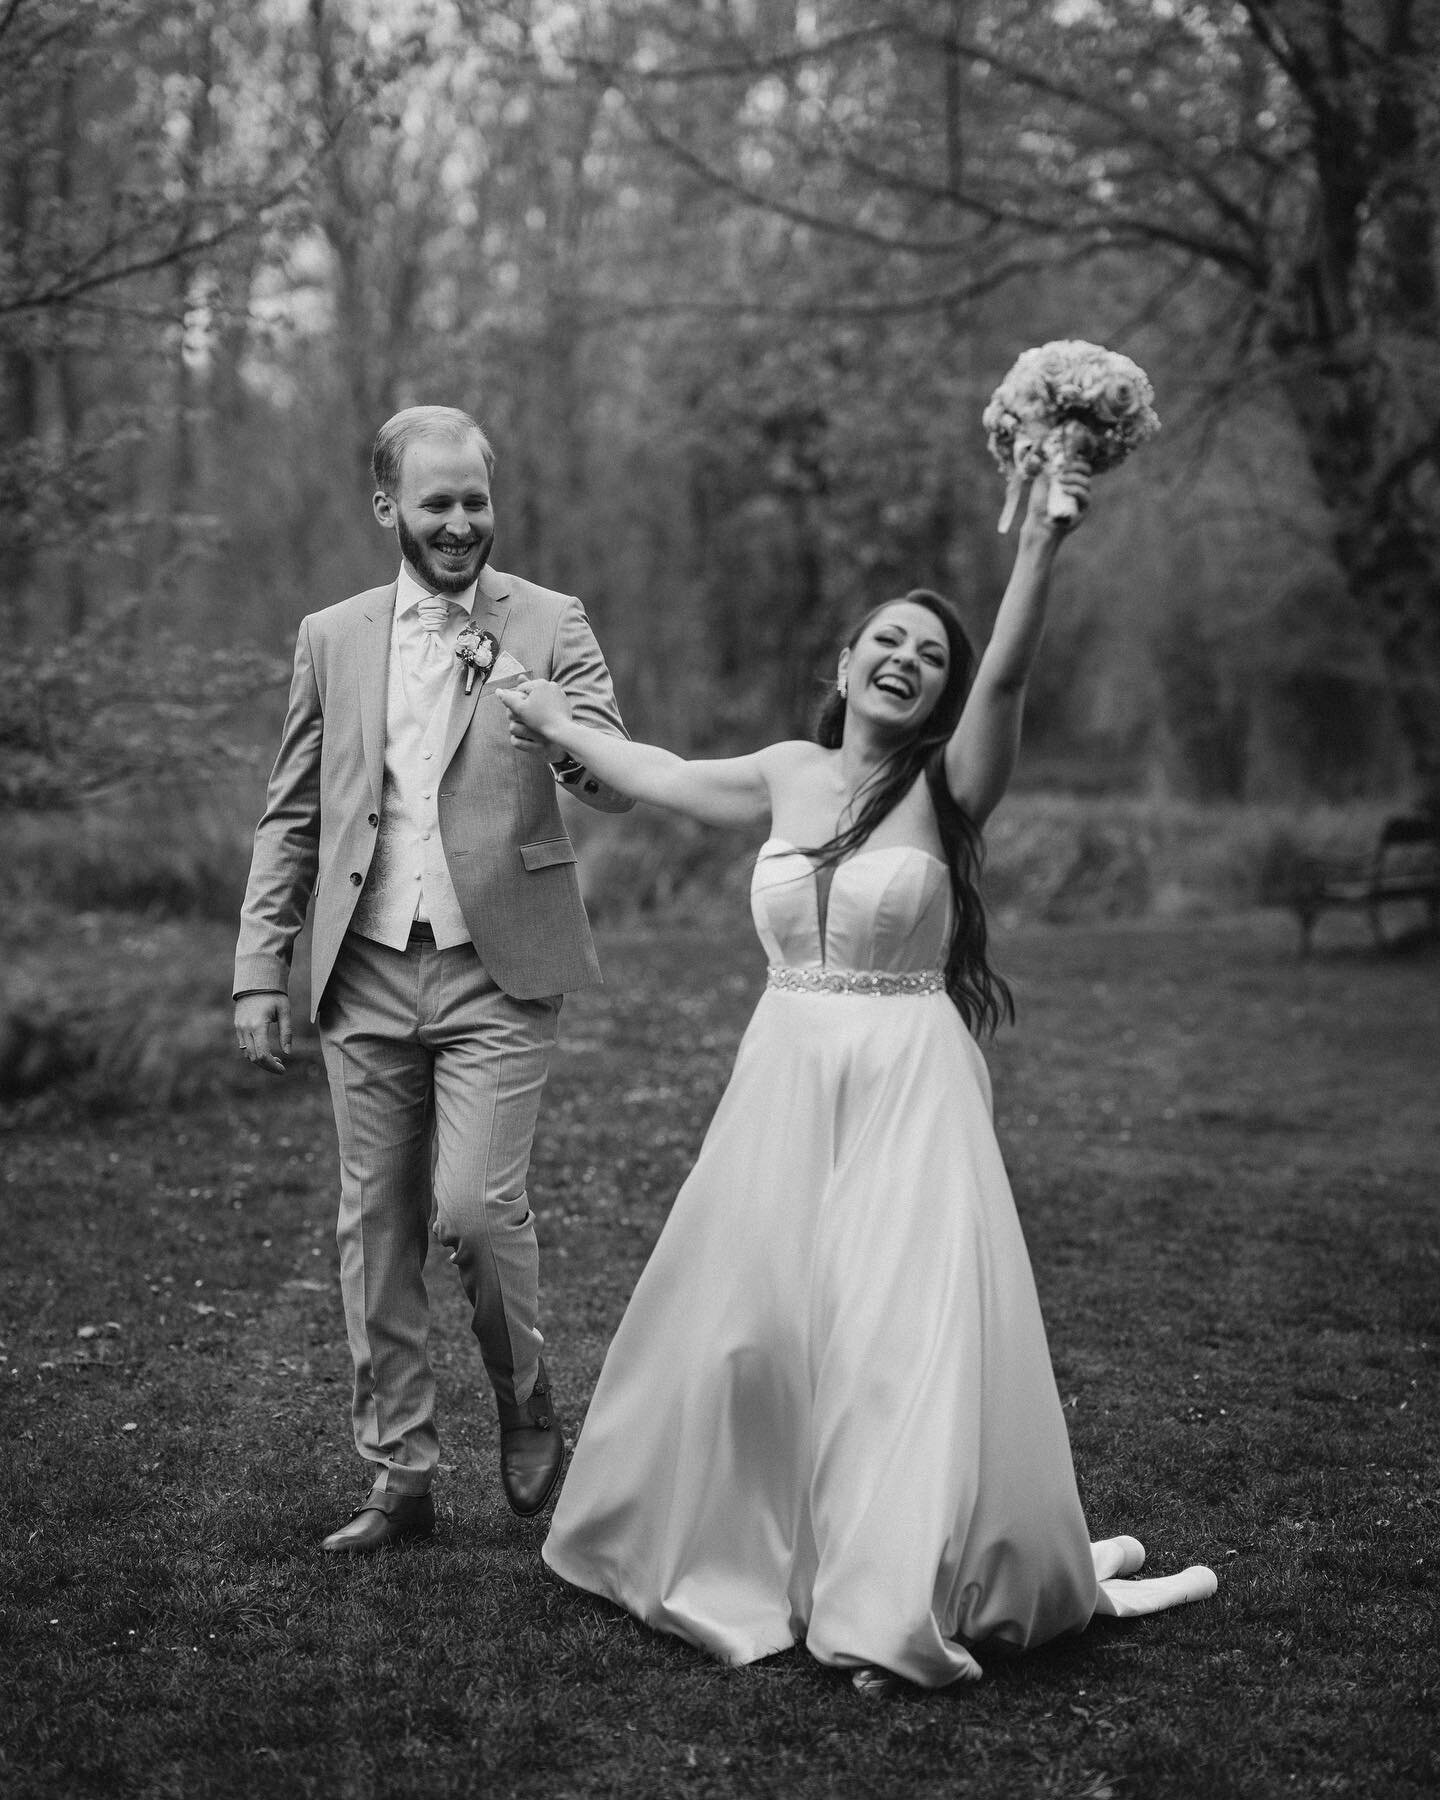 Happy vibes from last week's wedding. Oh the joy! 🤩

#brideandgroom #wedding2022 #viennaweddingphotographer #austriaweddingphotographer #loveandwildhearts #greenweddingshoes #junebugweddings #authenticlovemag #lovellope #ataleofhearts #littleriverma